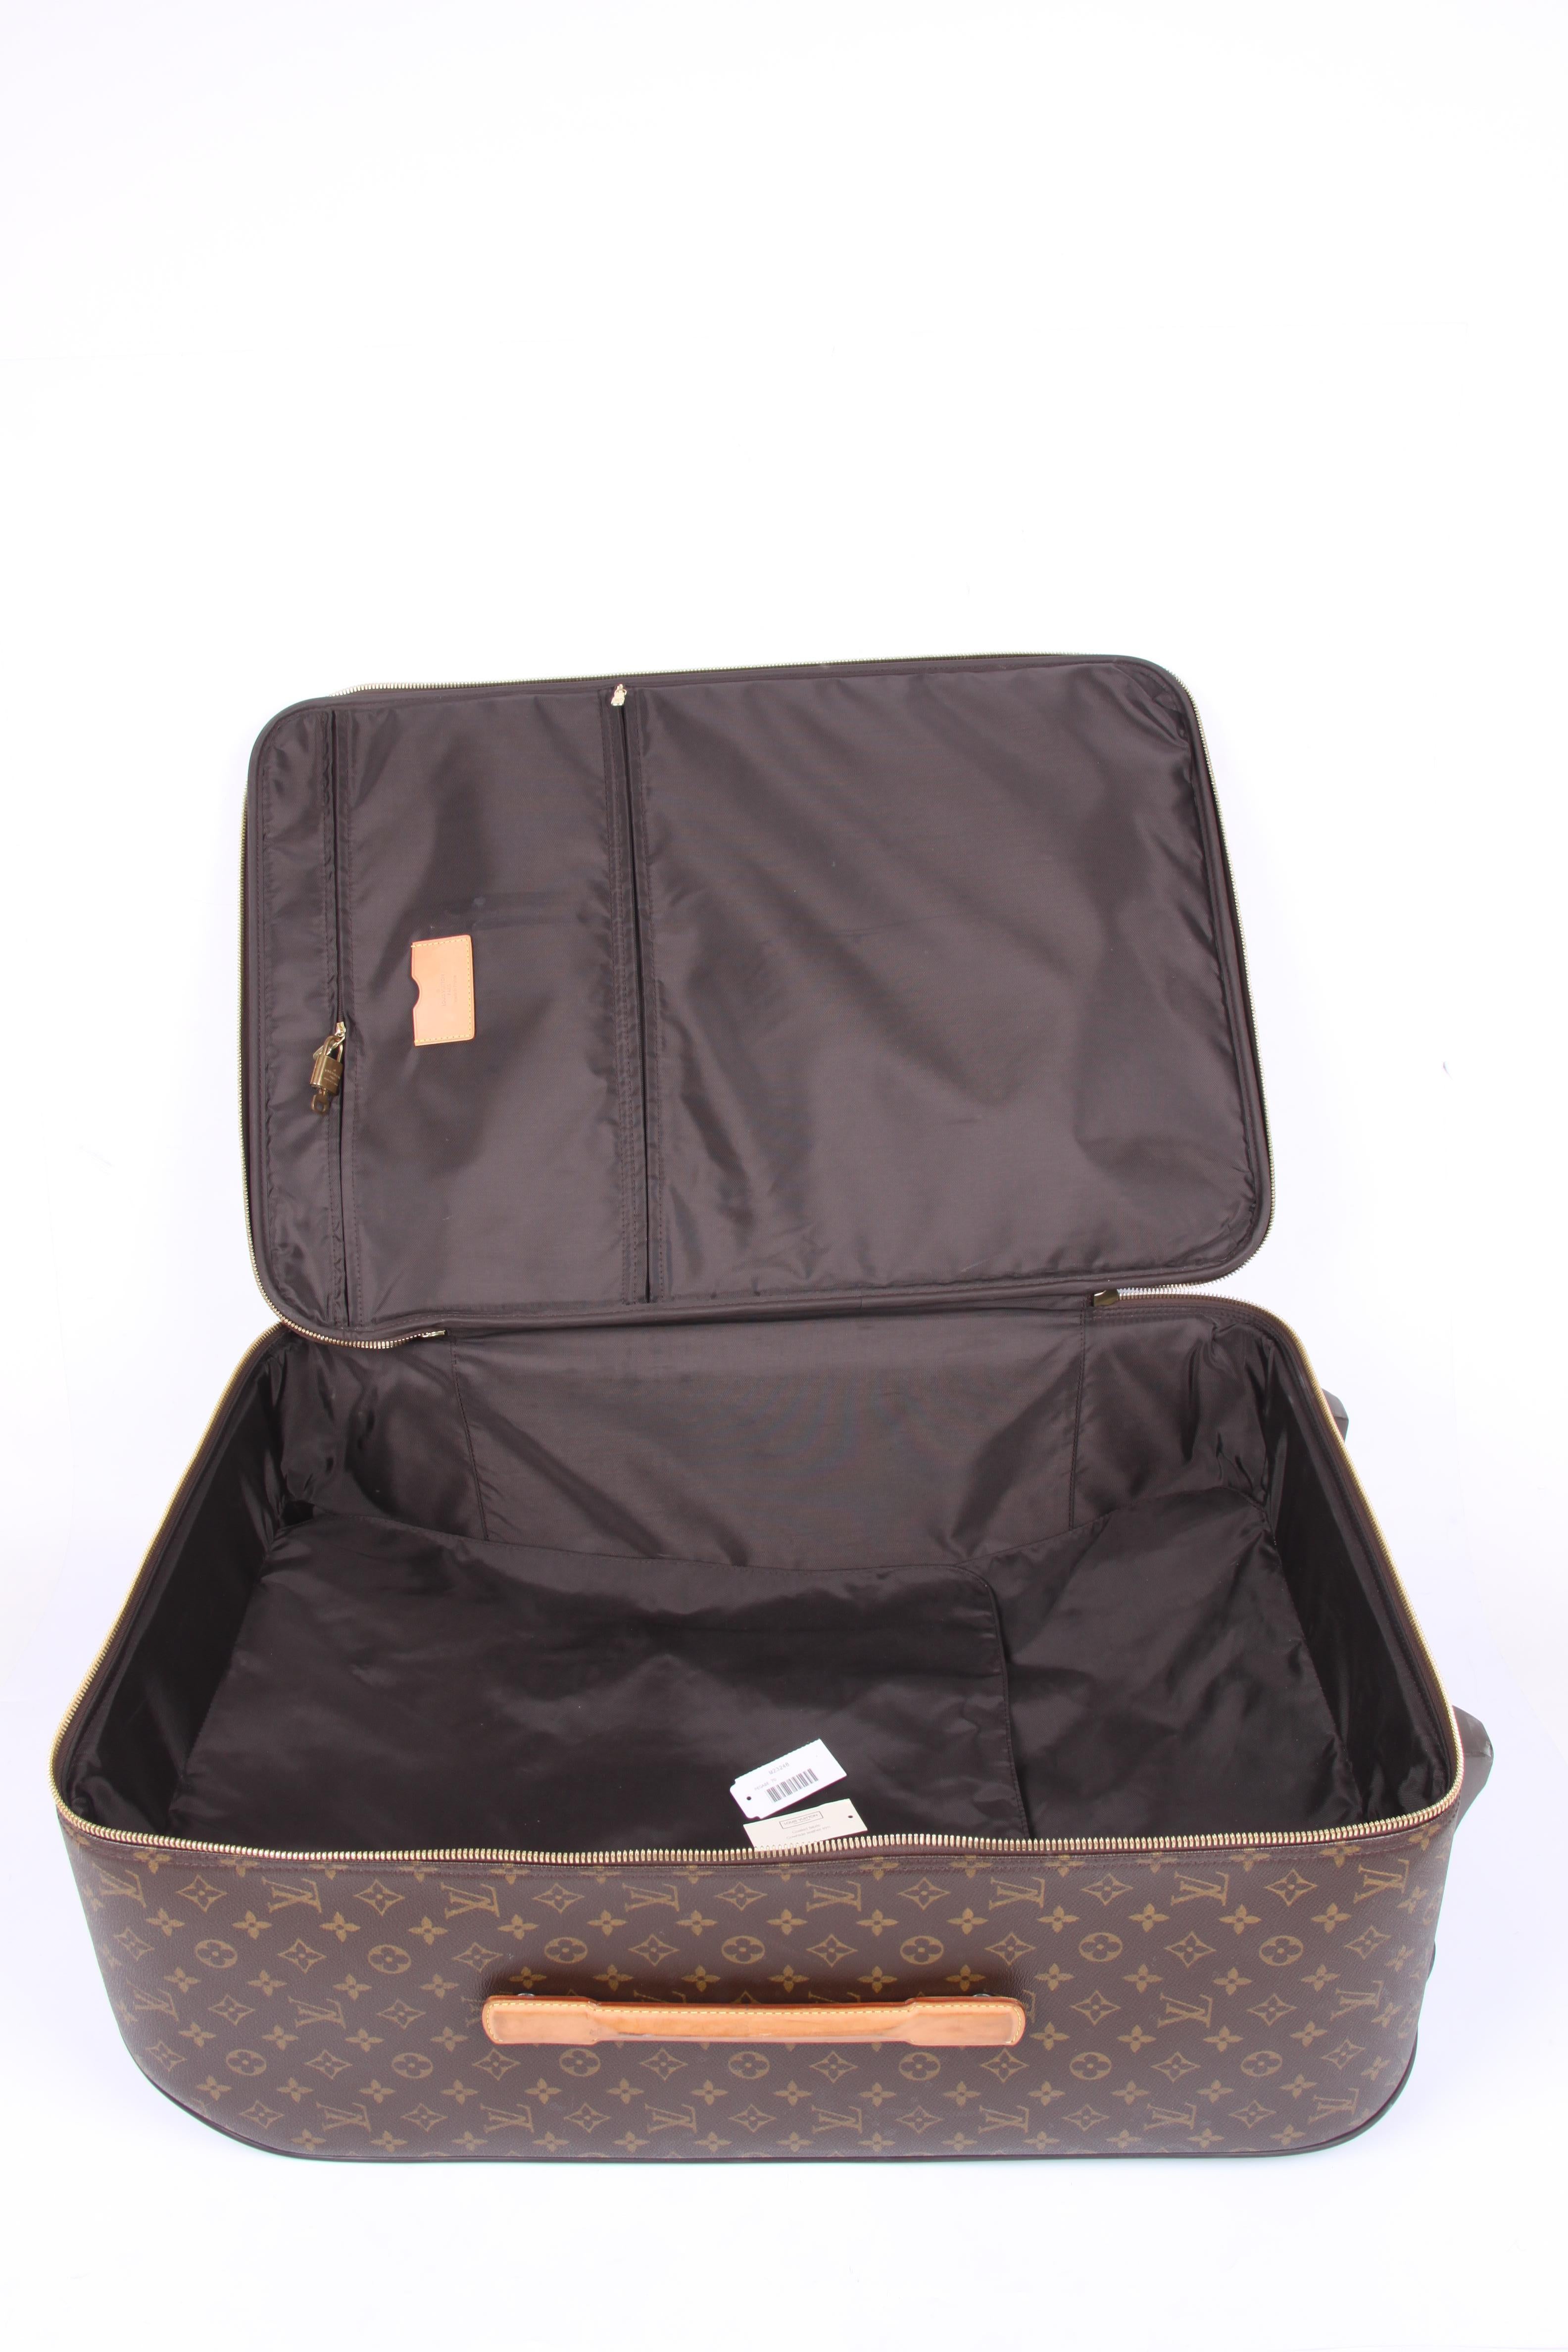 Louis Vuitton Pegase 70 Monogram Suitcase - brown 6